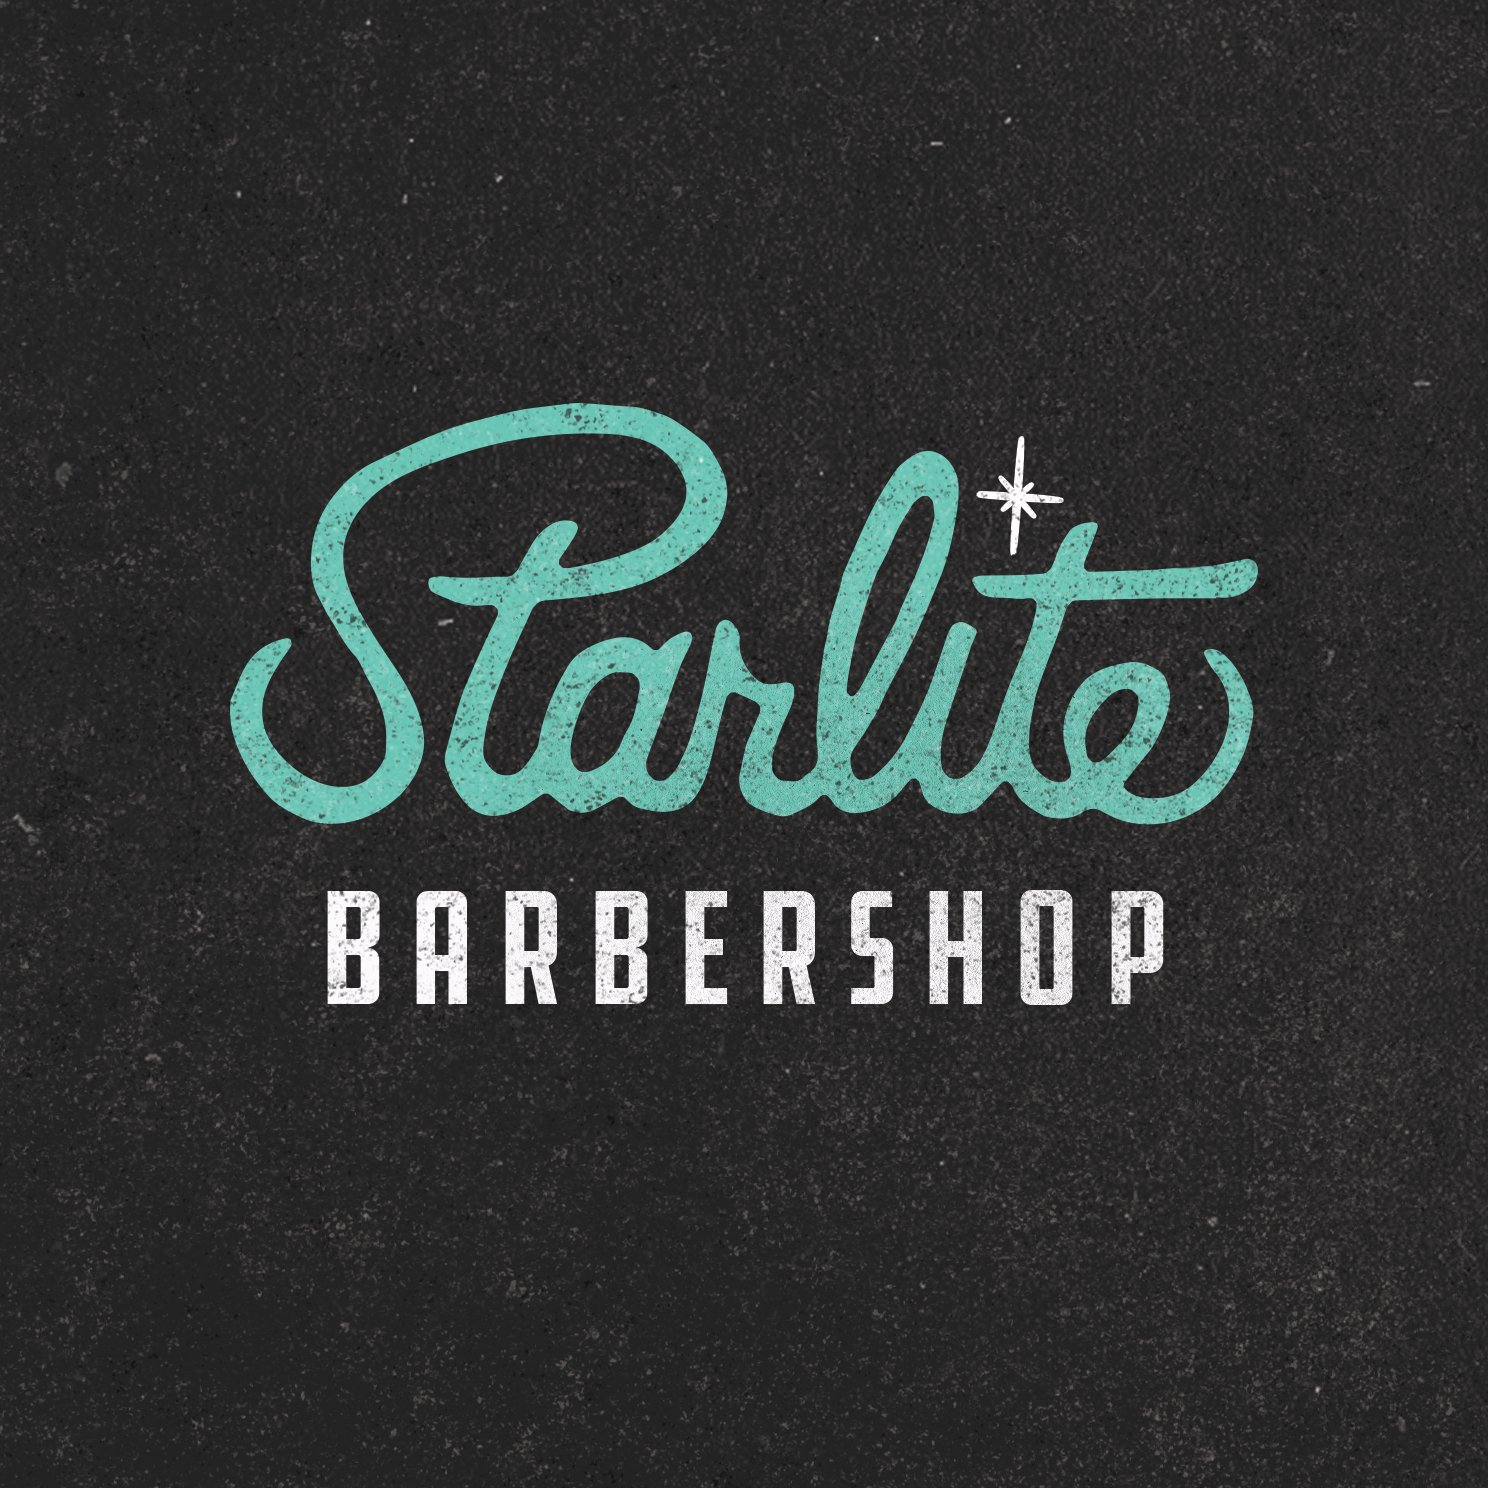 Starlite Barbershop logo